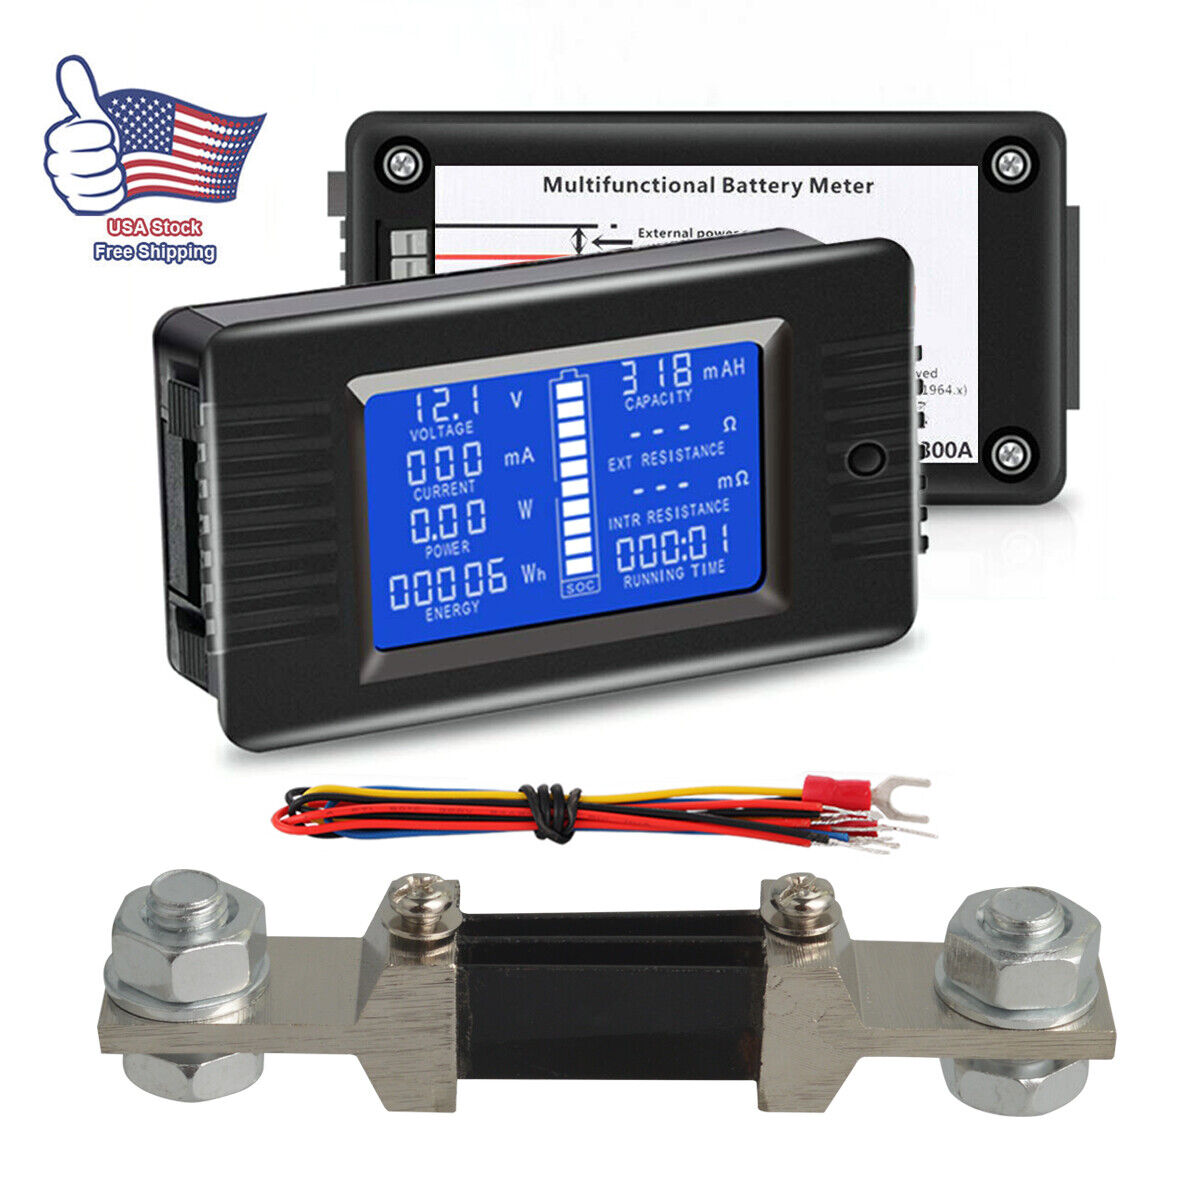 LCD Display DC Battery Monitor Meter 0-200V Volt Amp for Cars RV Solar System